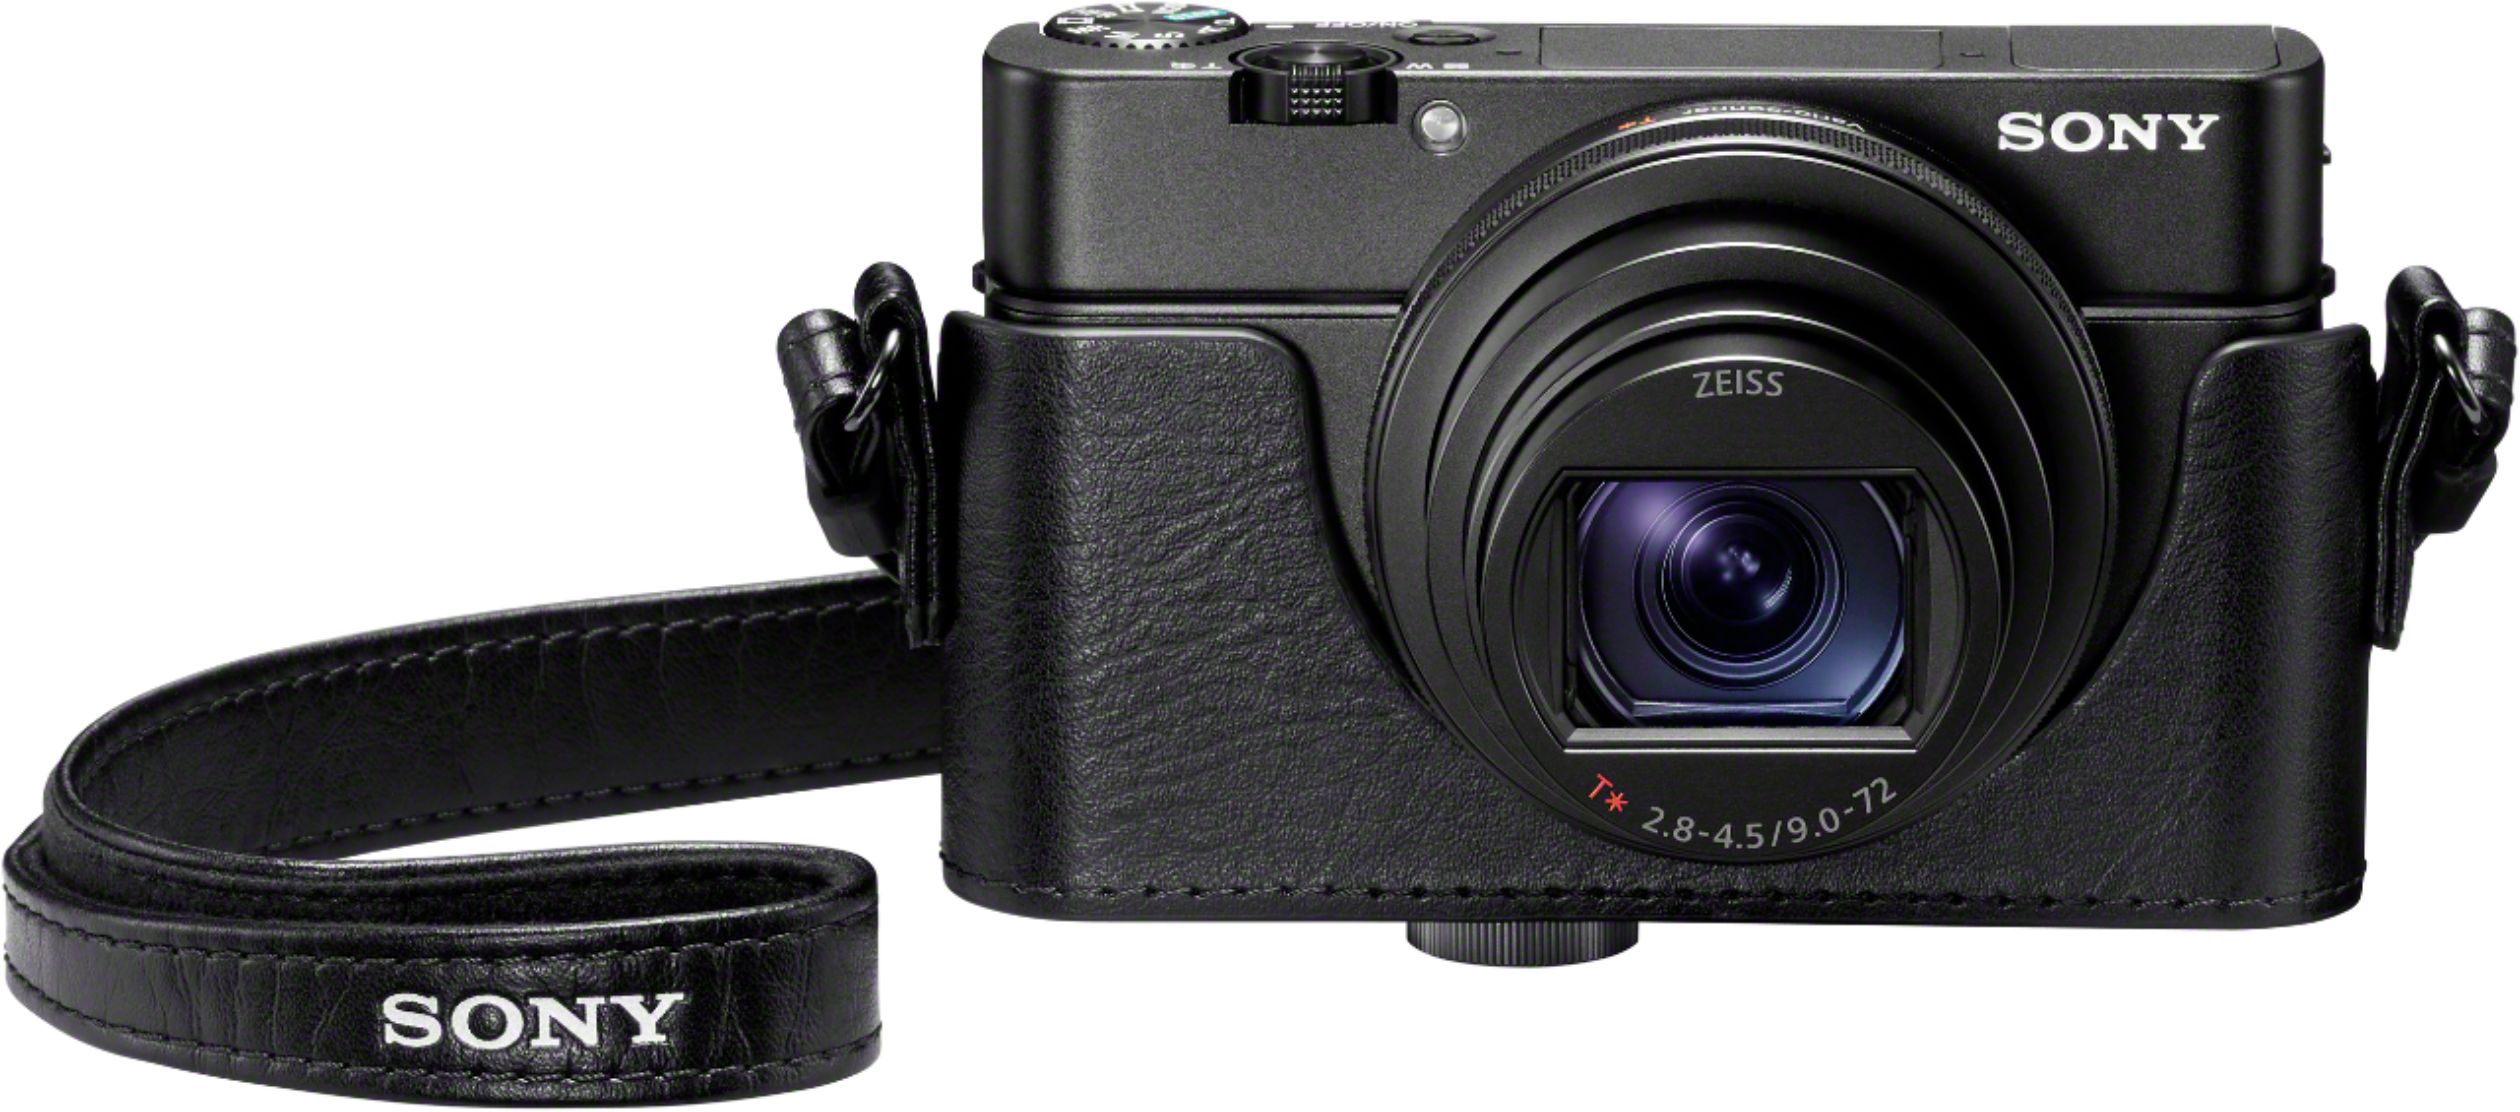 Sony DSC-RX100 VII Cyber-Shot Digital Camera with Shooting Grip Kit -  DSCRX100M7G